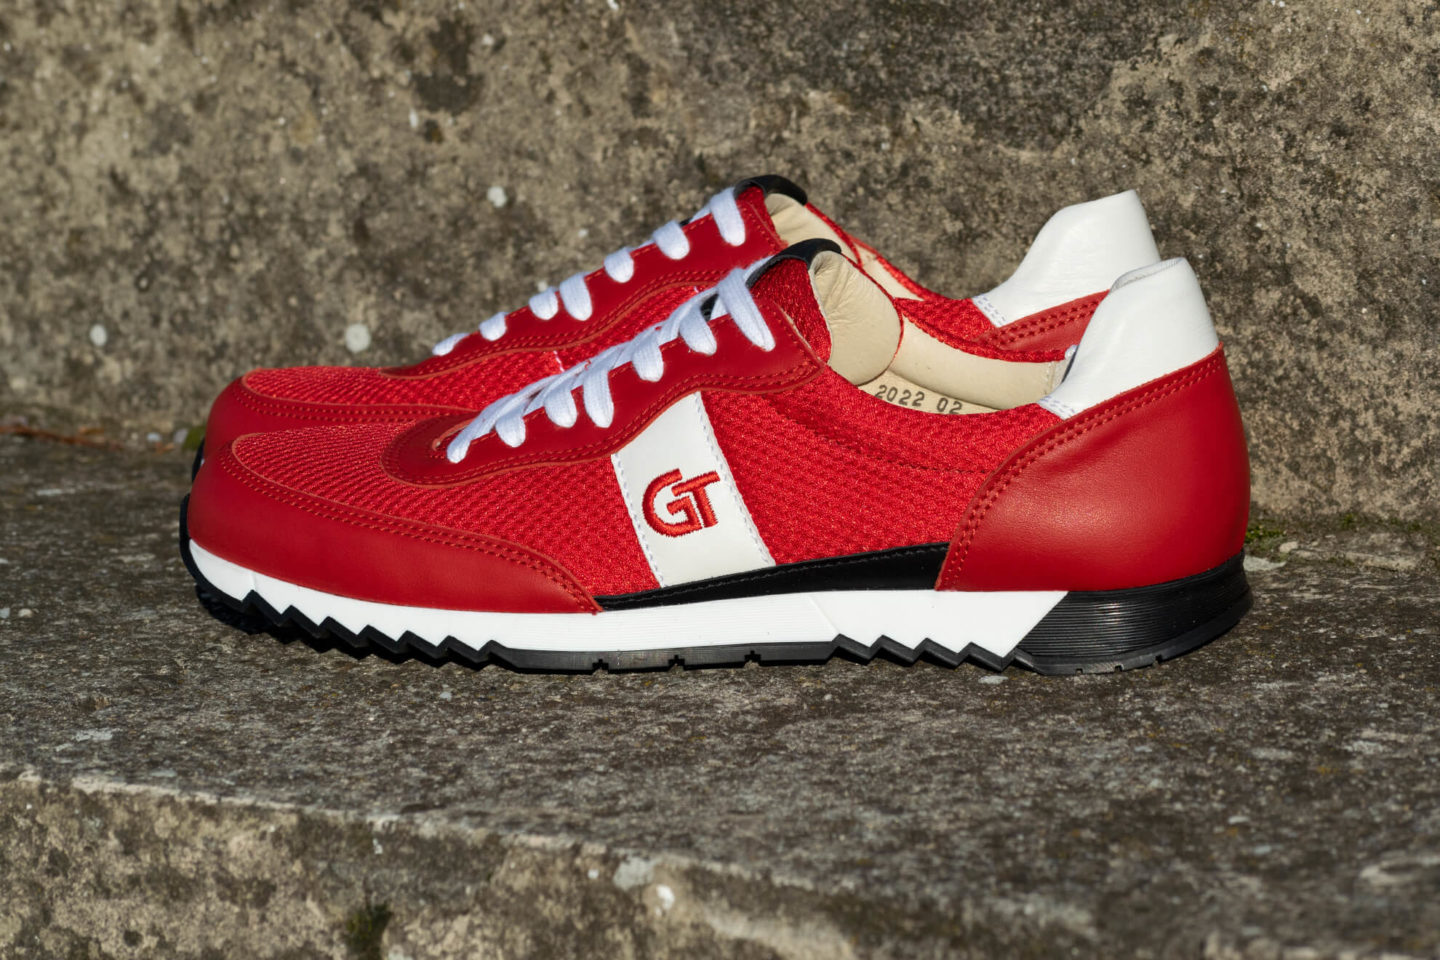 G&T Aktív Piros textil - Fehér - Fekete sportcipő